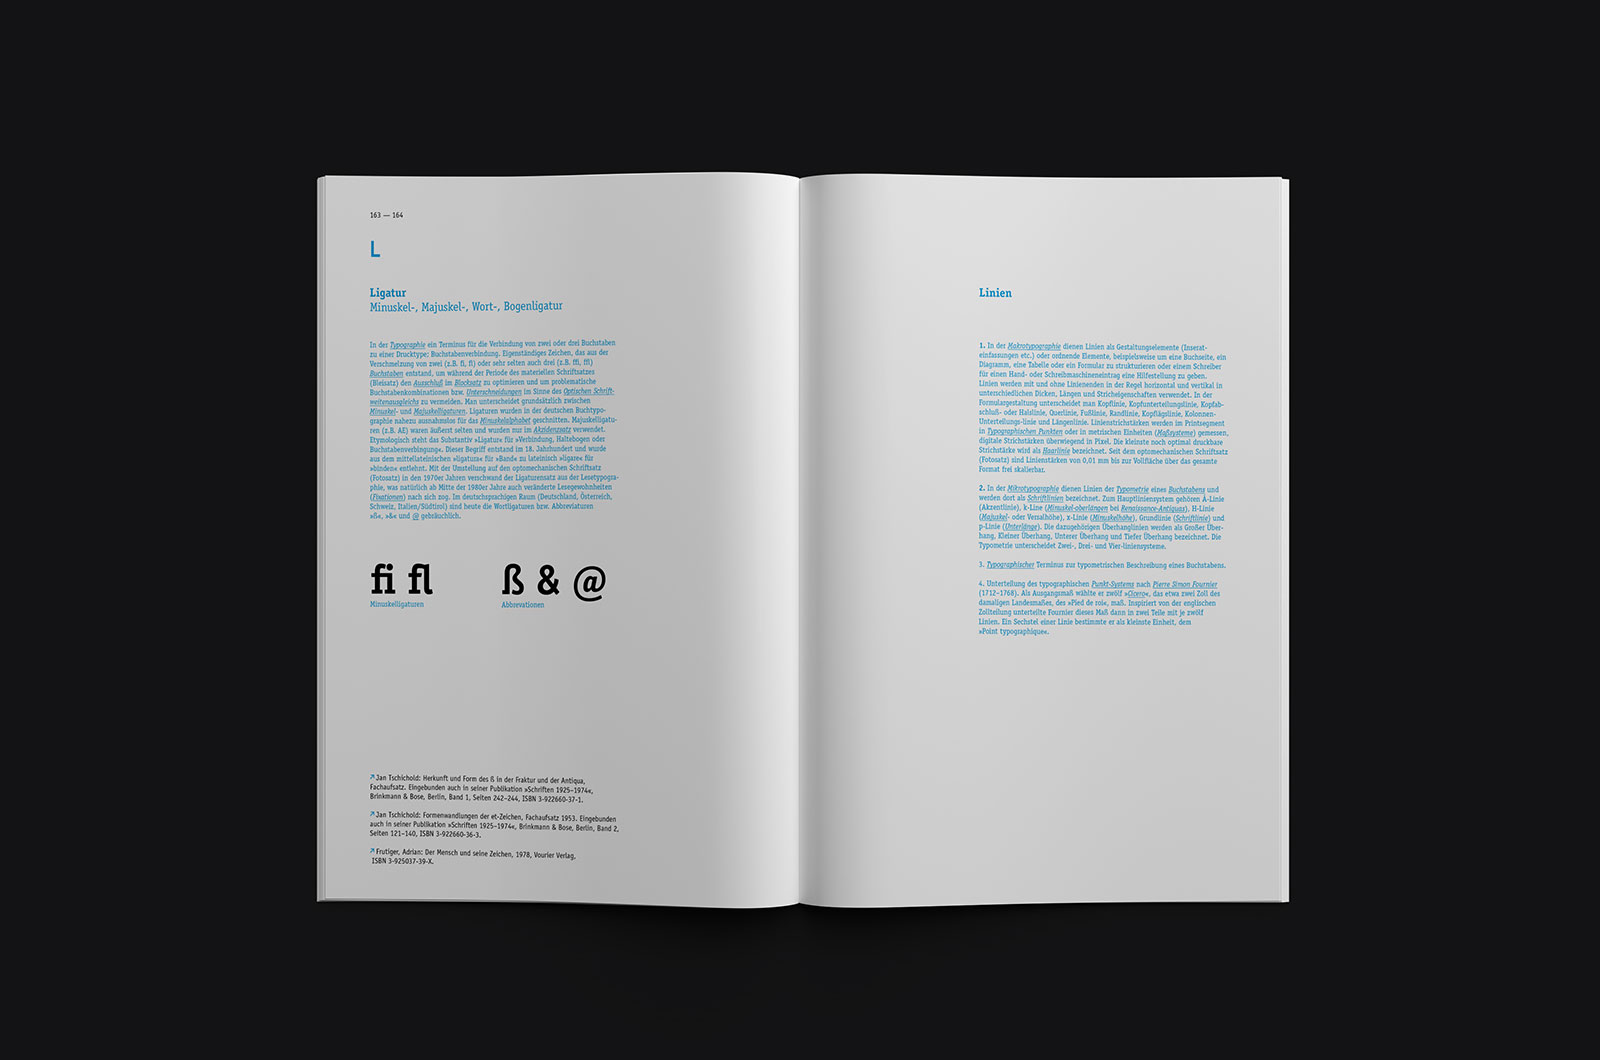 Alexander Glante - Works - Typografie Kompakt - 09